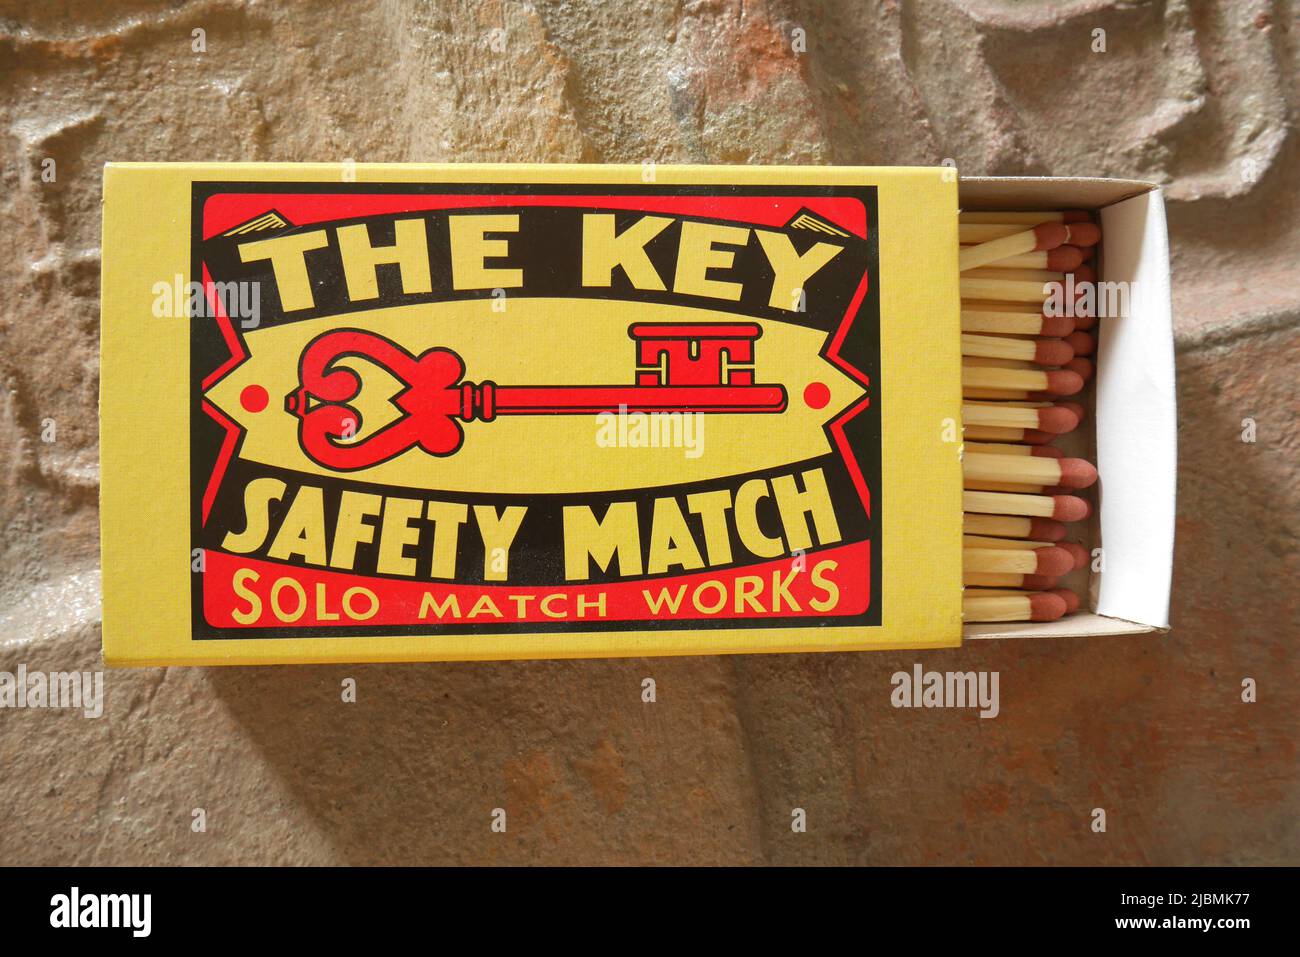 Box of Czech safety fósforos, marca The Key Foto de stock